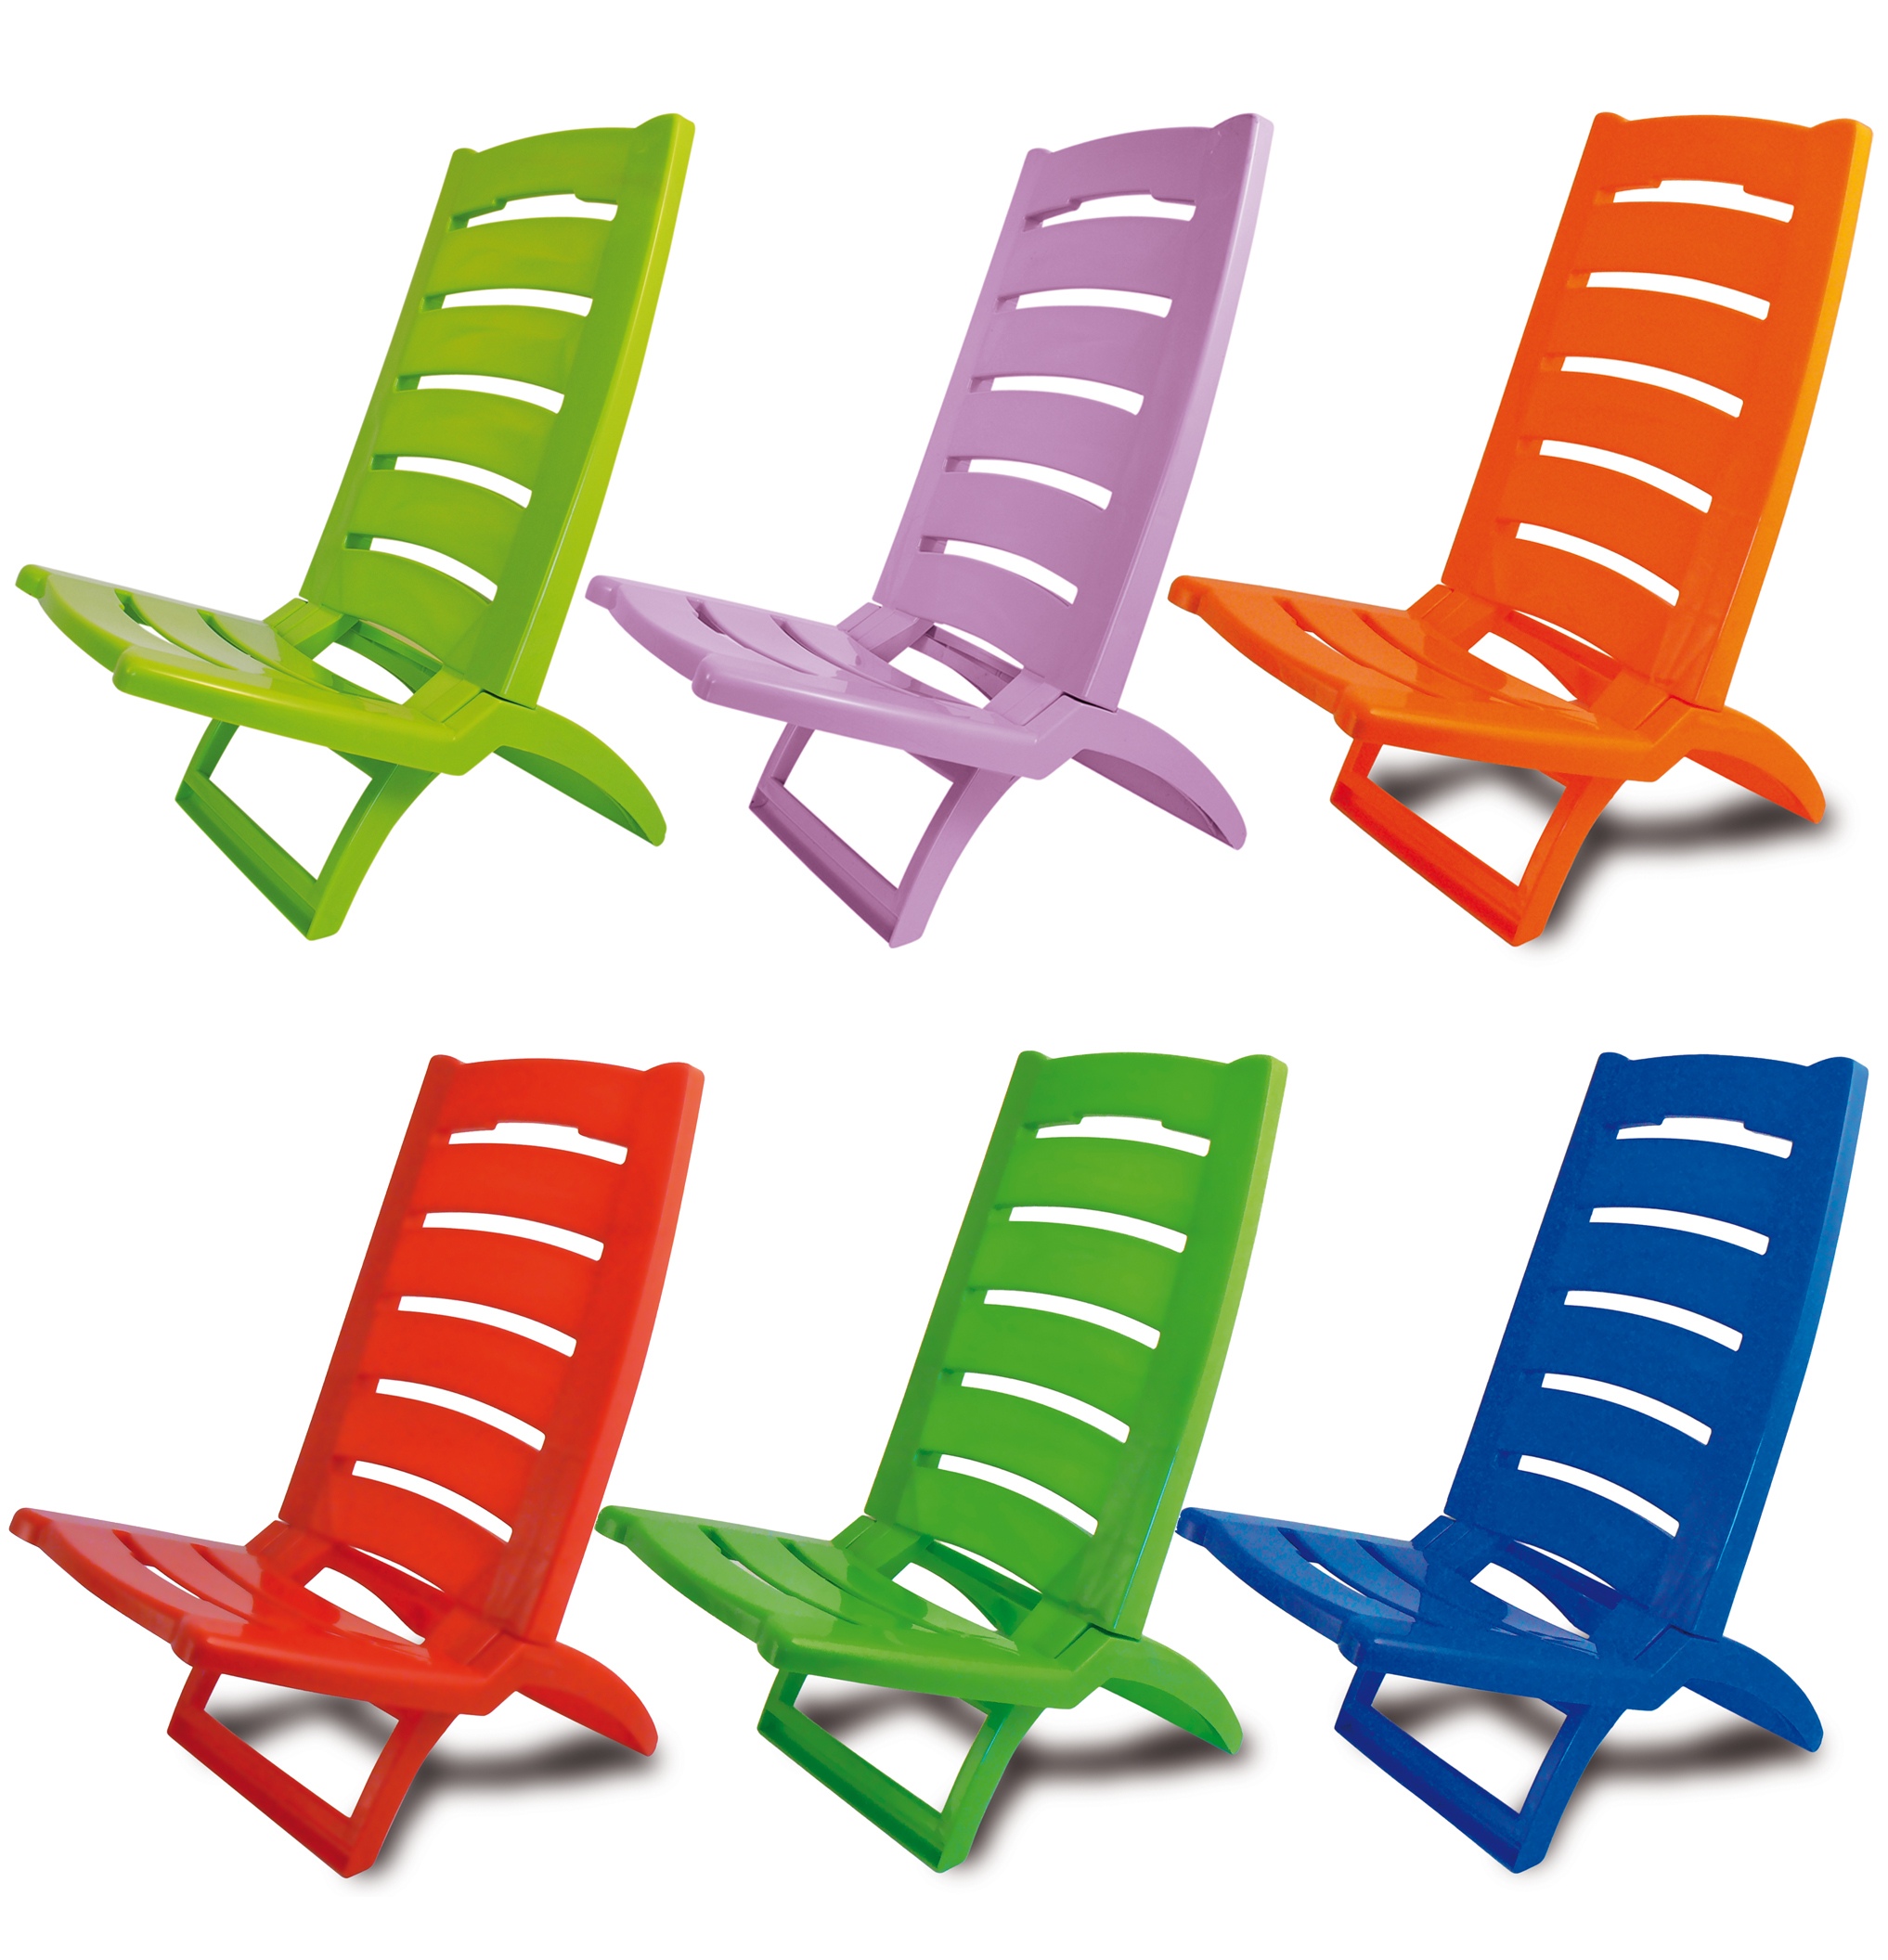 Plastic Portable Folding Low Beach Chairs Coloured Garden Picnic Deck